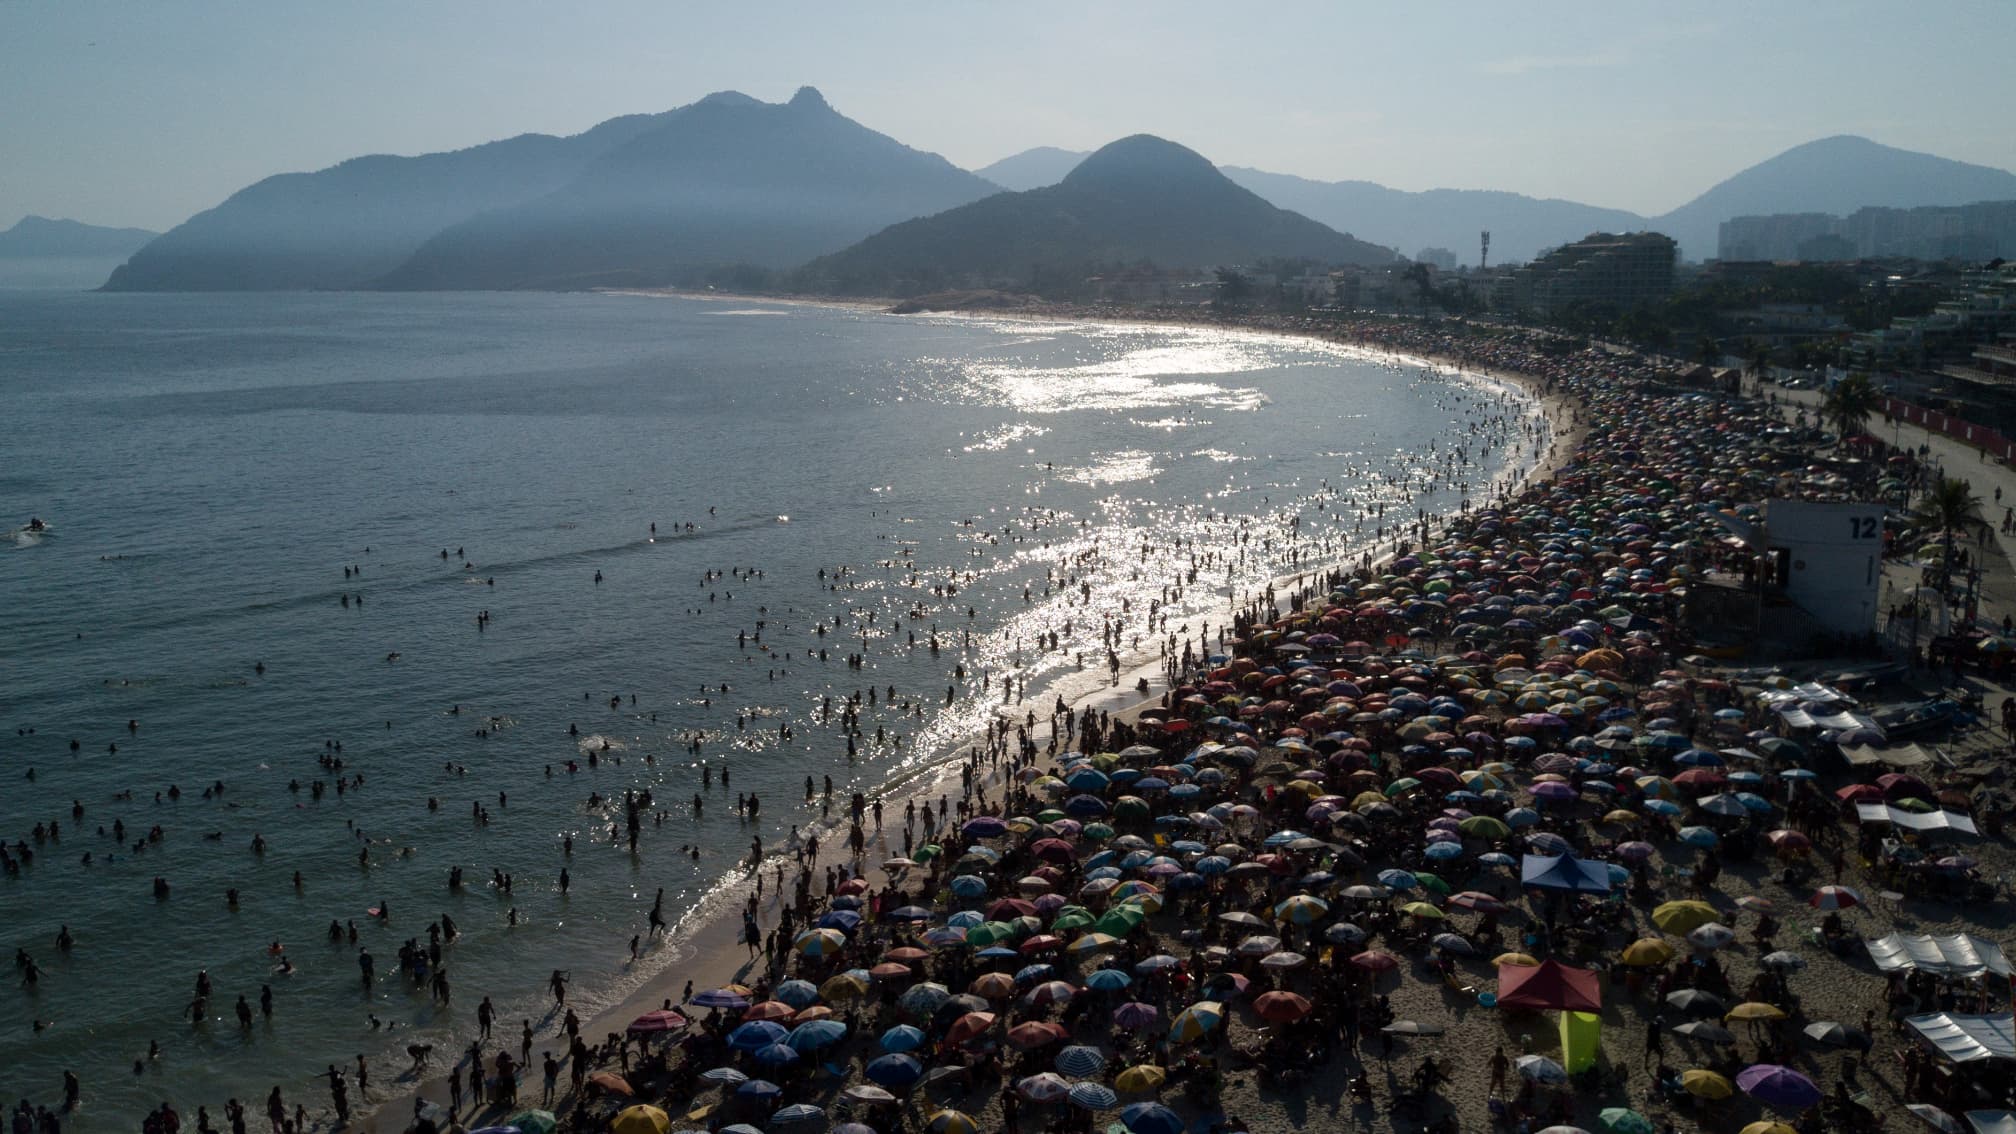 Rio de Janeiro is facing an unprecedented heat wave